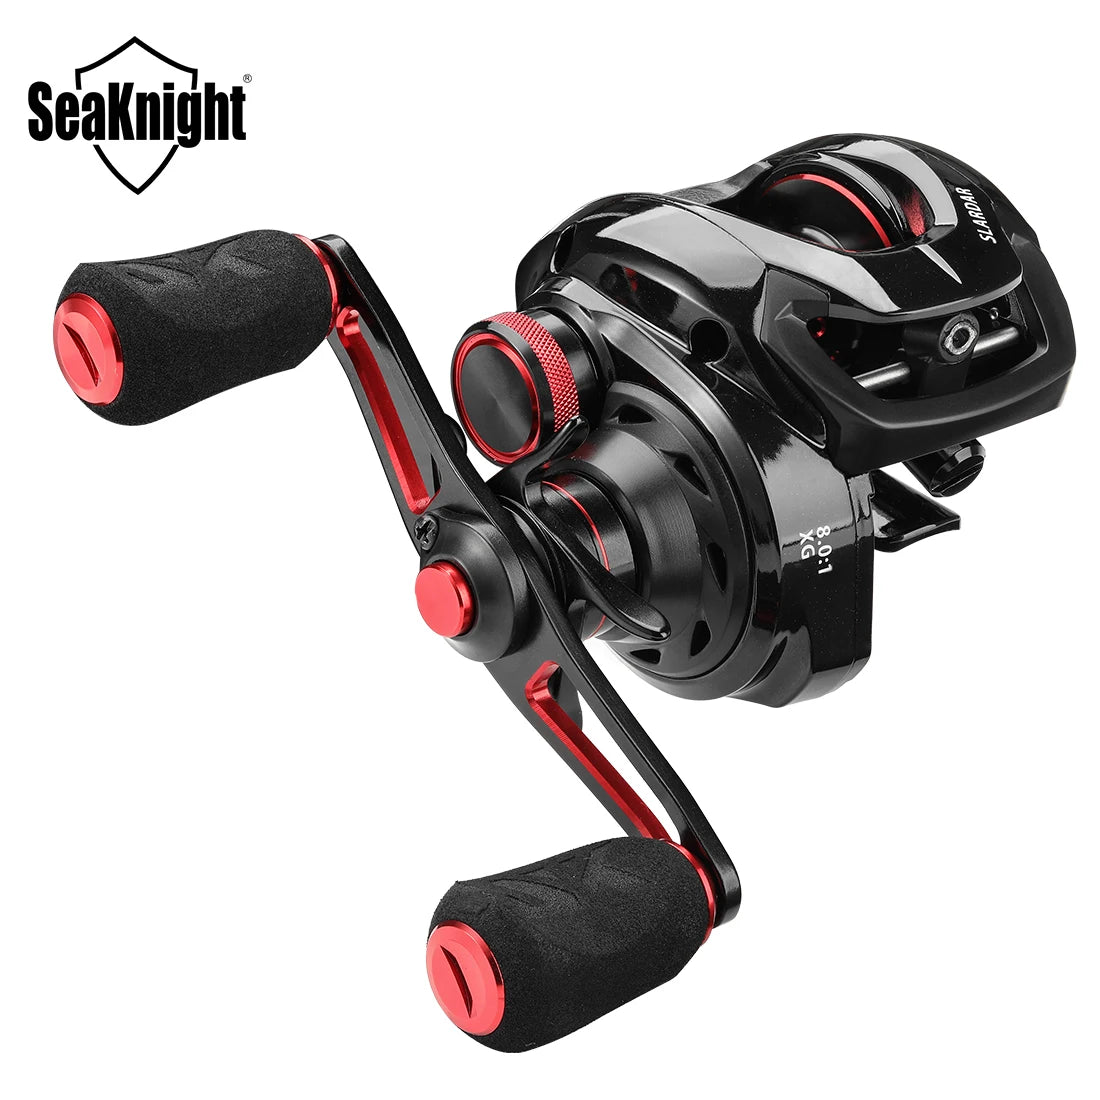 SeaKnight Brand SLARDAR Series 7.0:1 8.0:1 Baitcasting Fishing Reel 190g Magnetic Brake System Carbon Fiber Drag 18LB Brass Gear